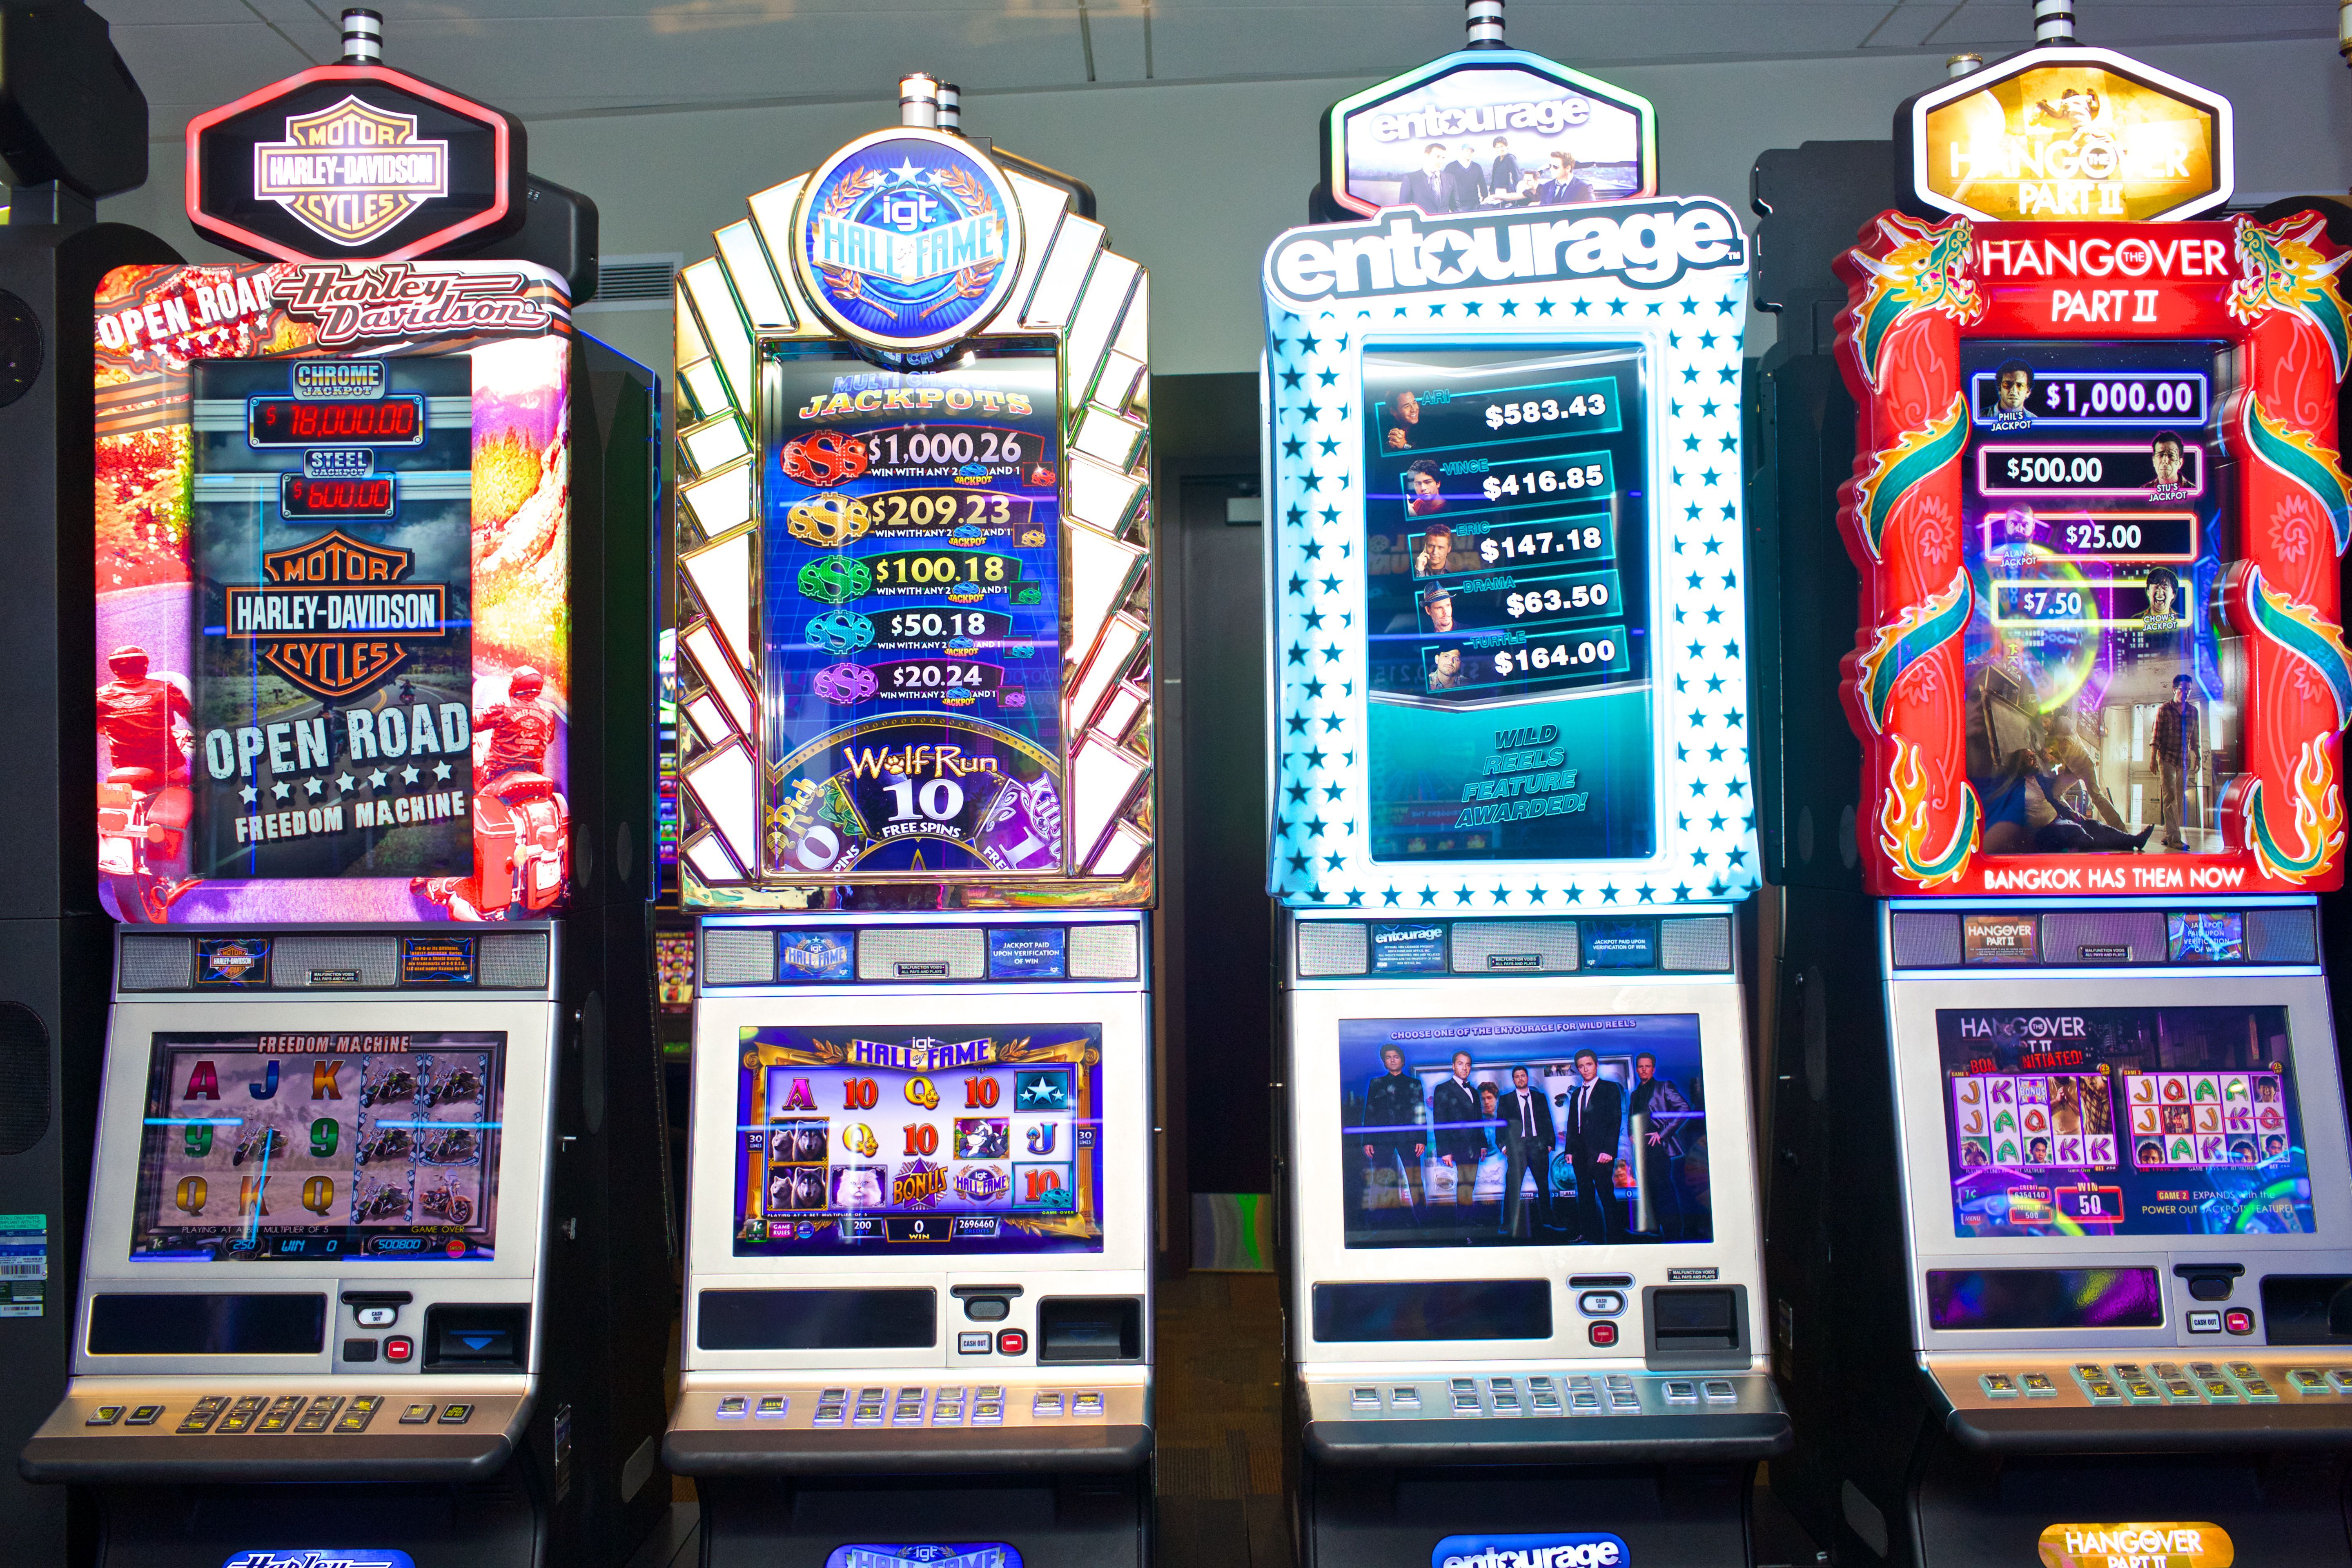 New Slot Machine Games